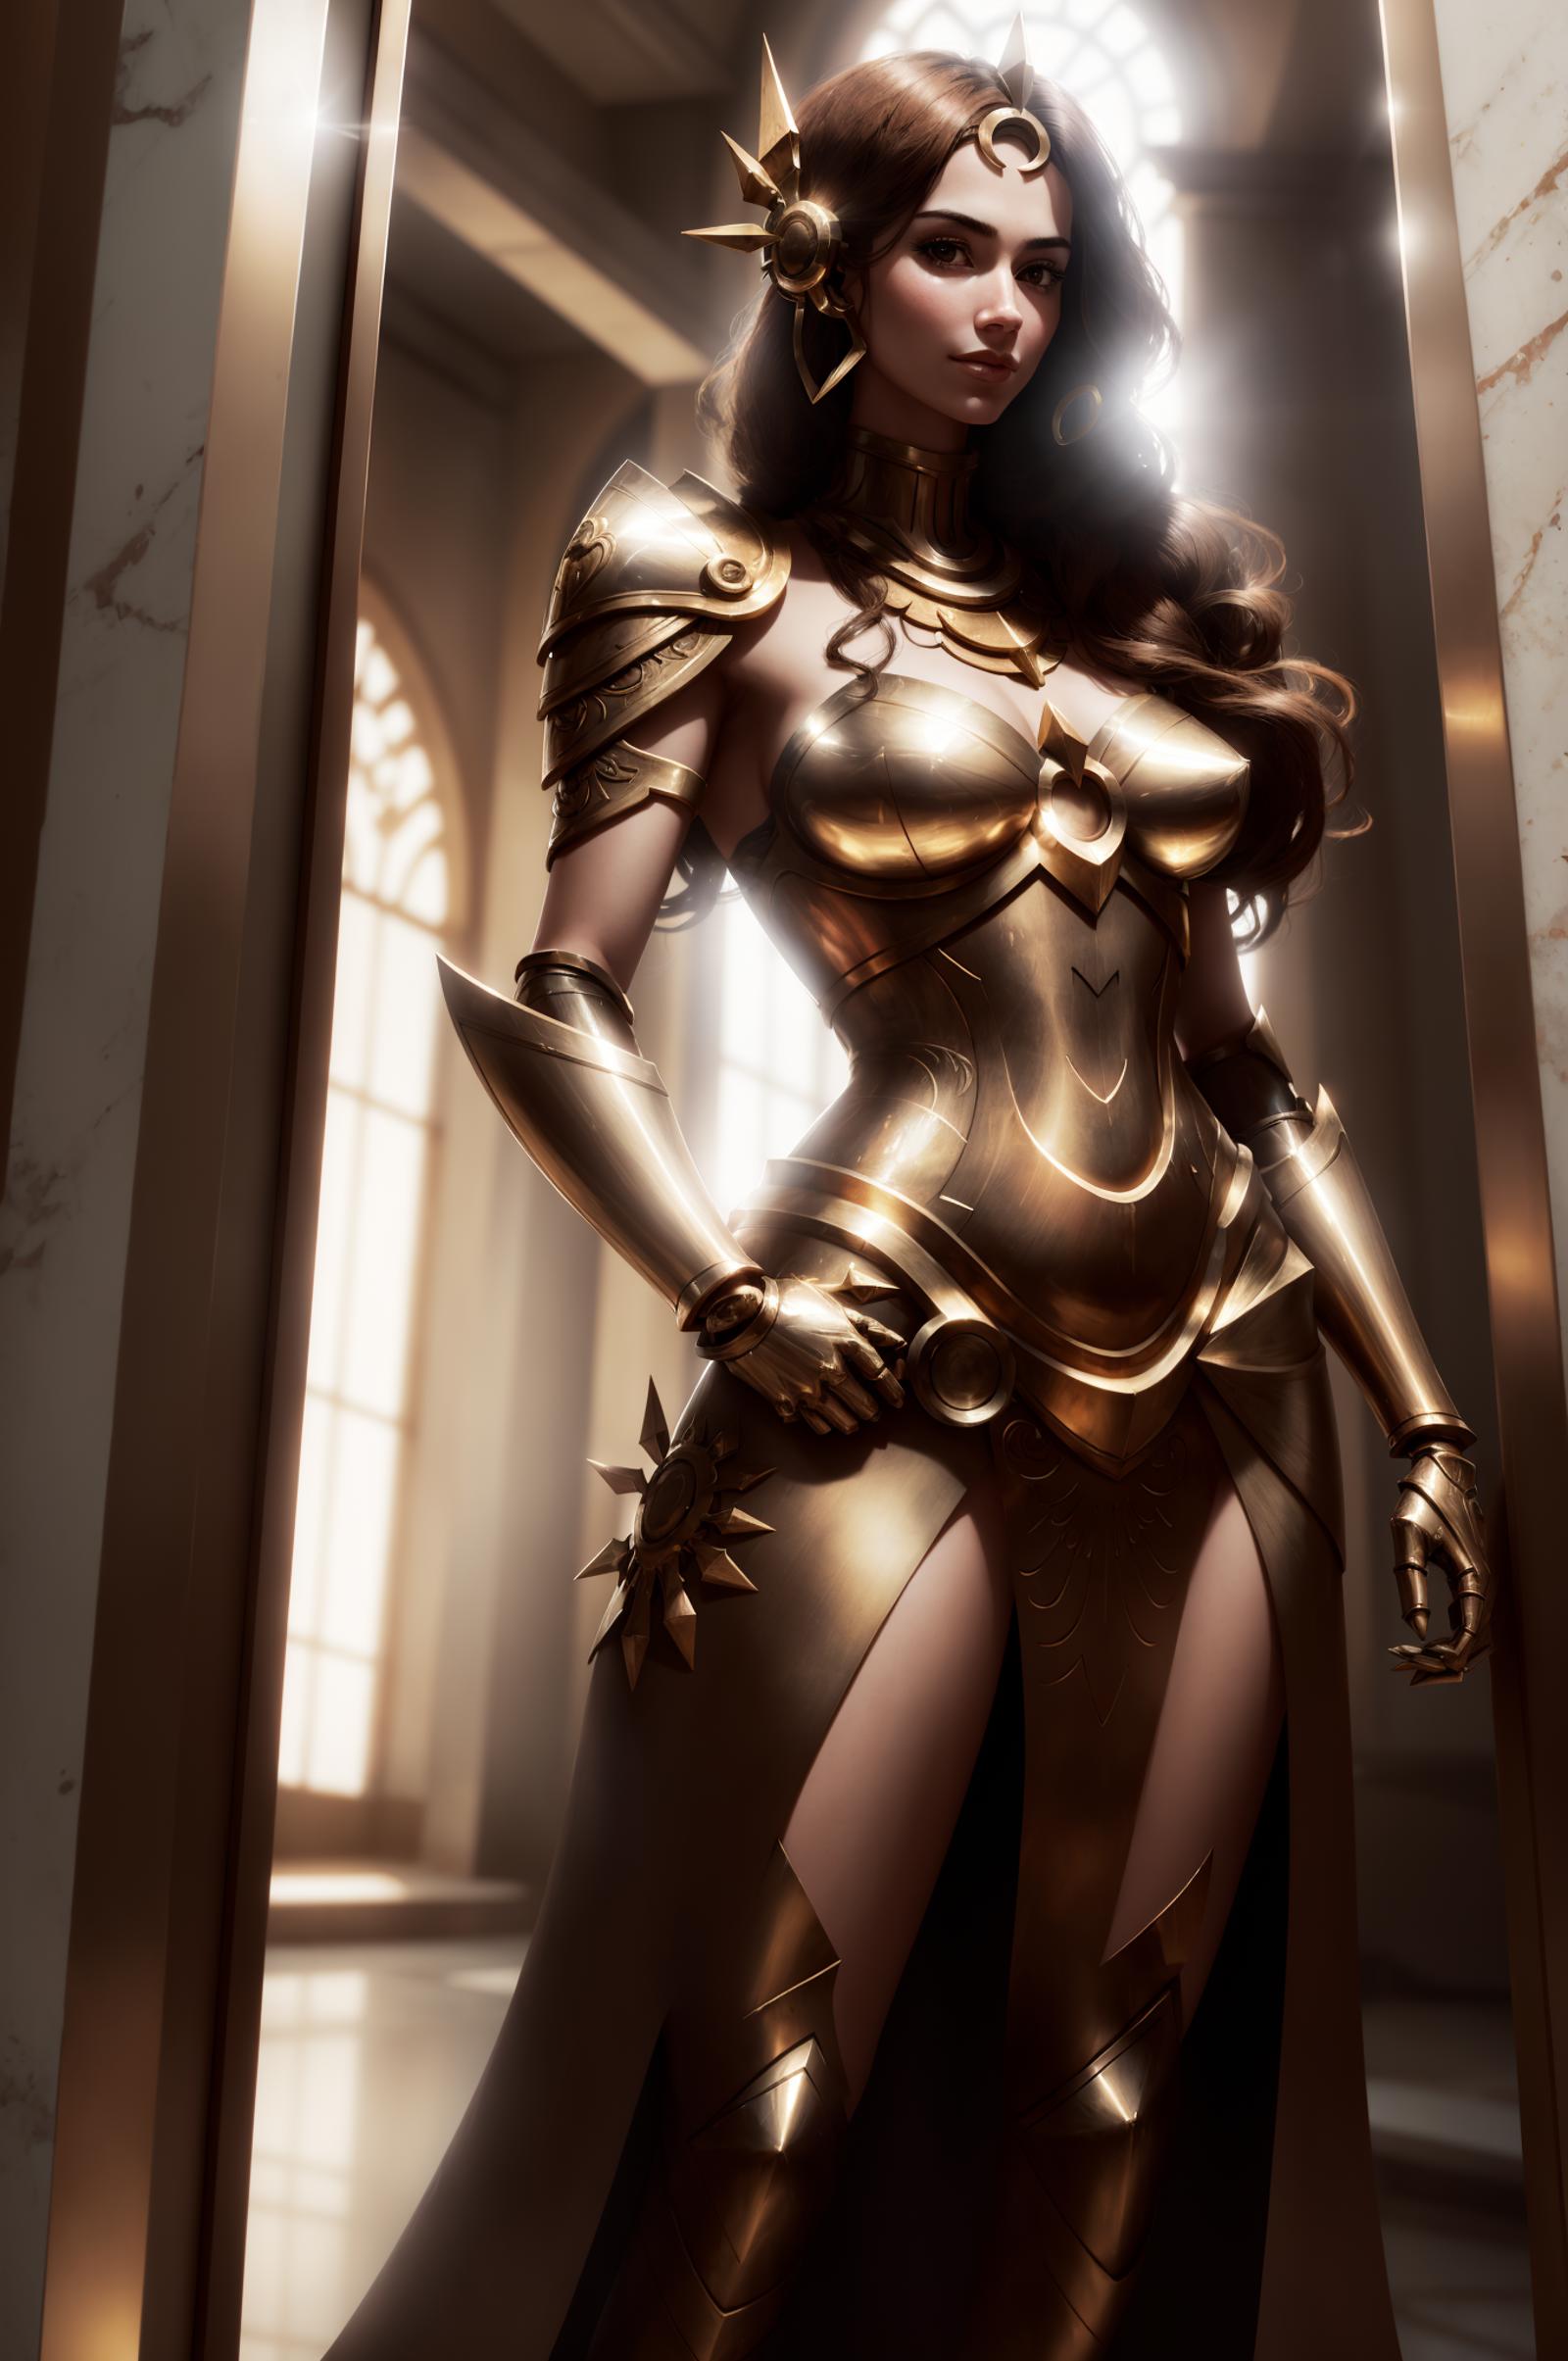 Leona | League of Legends image by DollarStoreAbraham